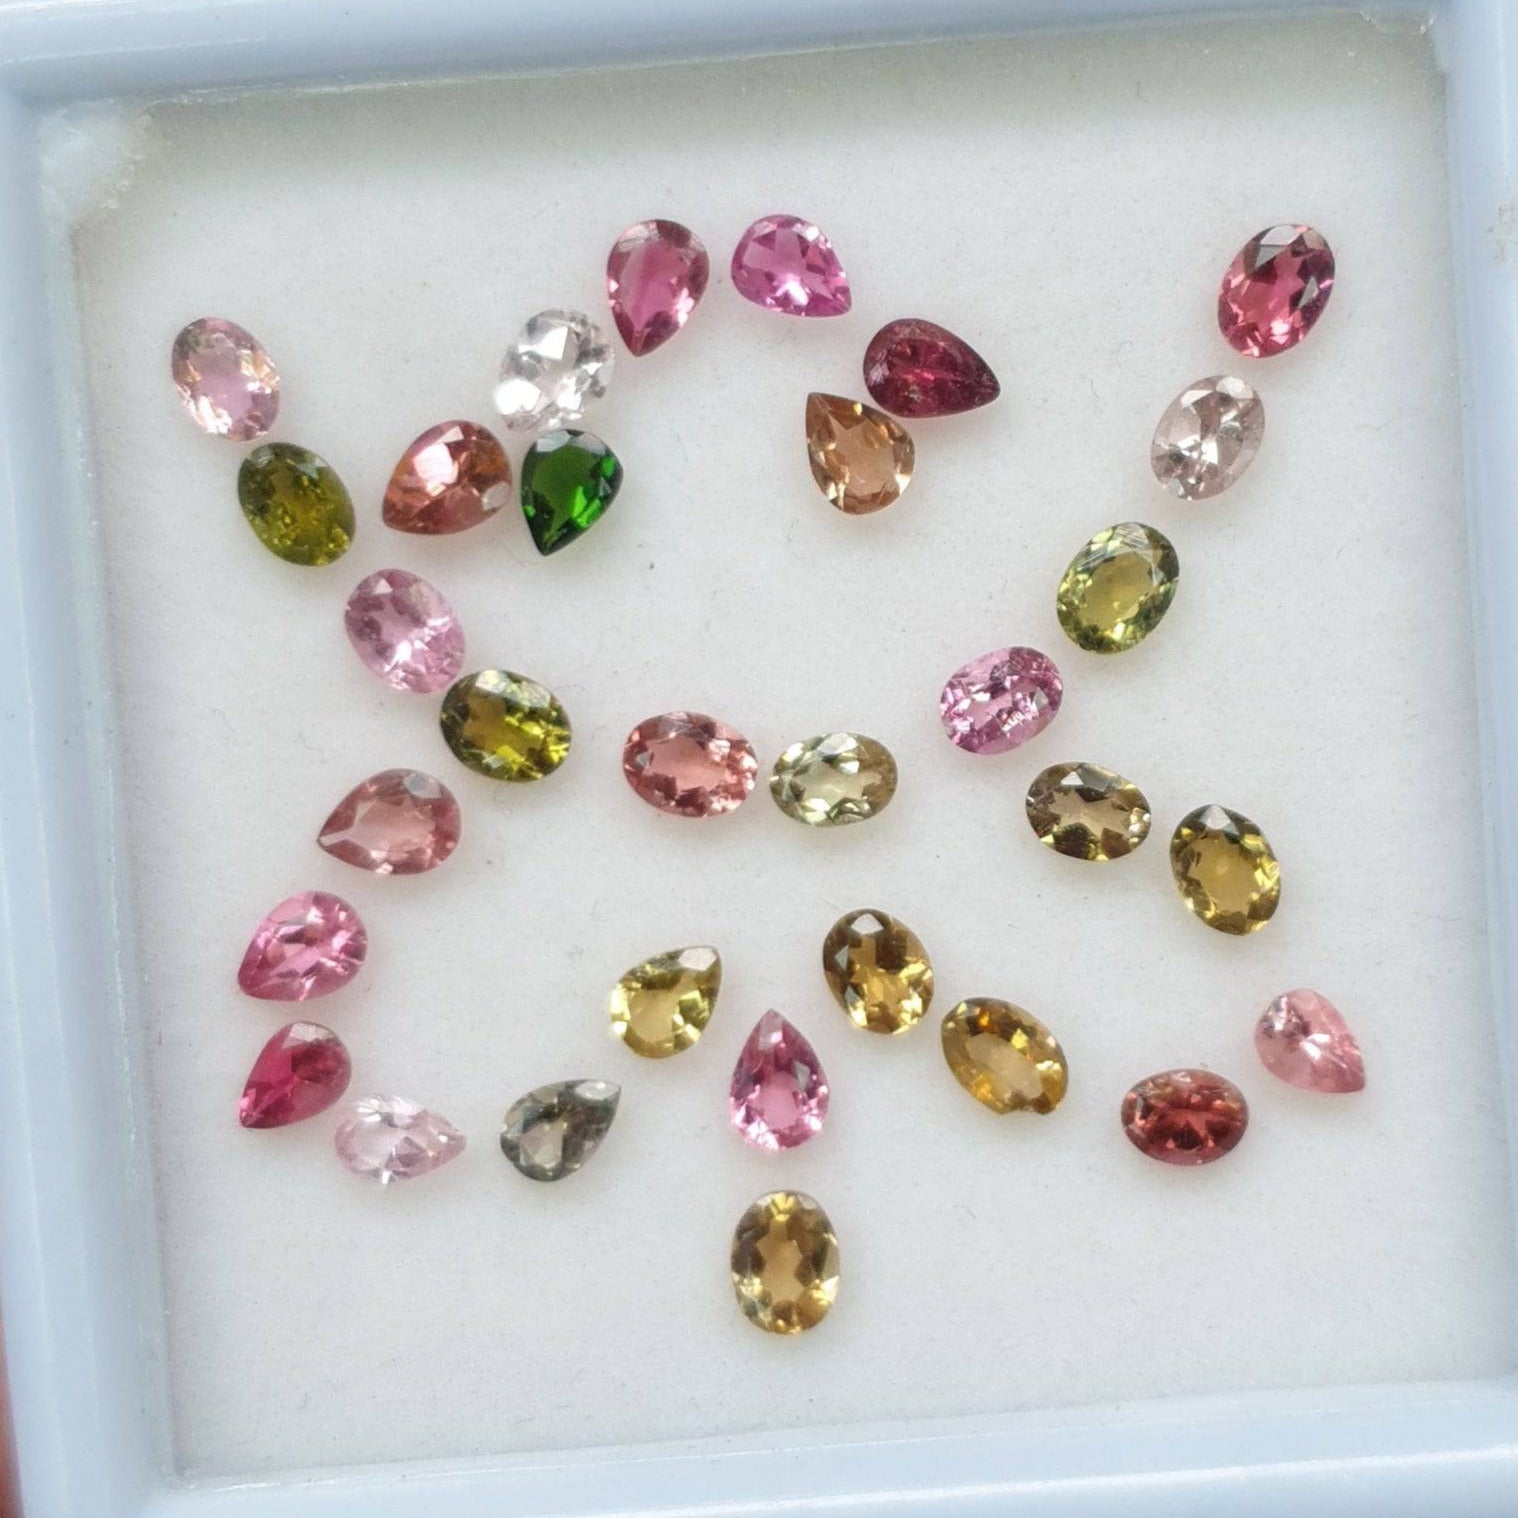 SALE🔥 31 Pcs Natural Tourmaline Gemstones Mix Shape, Sizes: 4x3mm - The LabradoriteKing